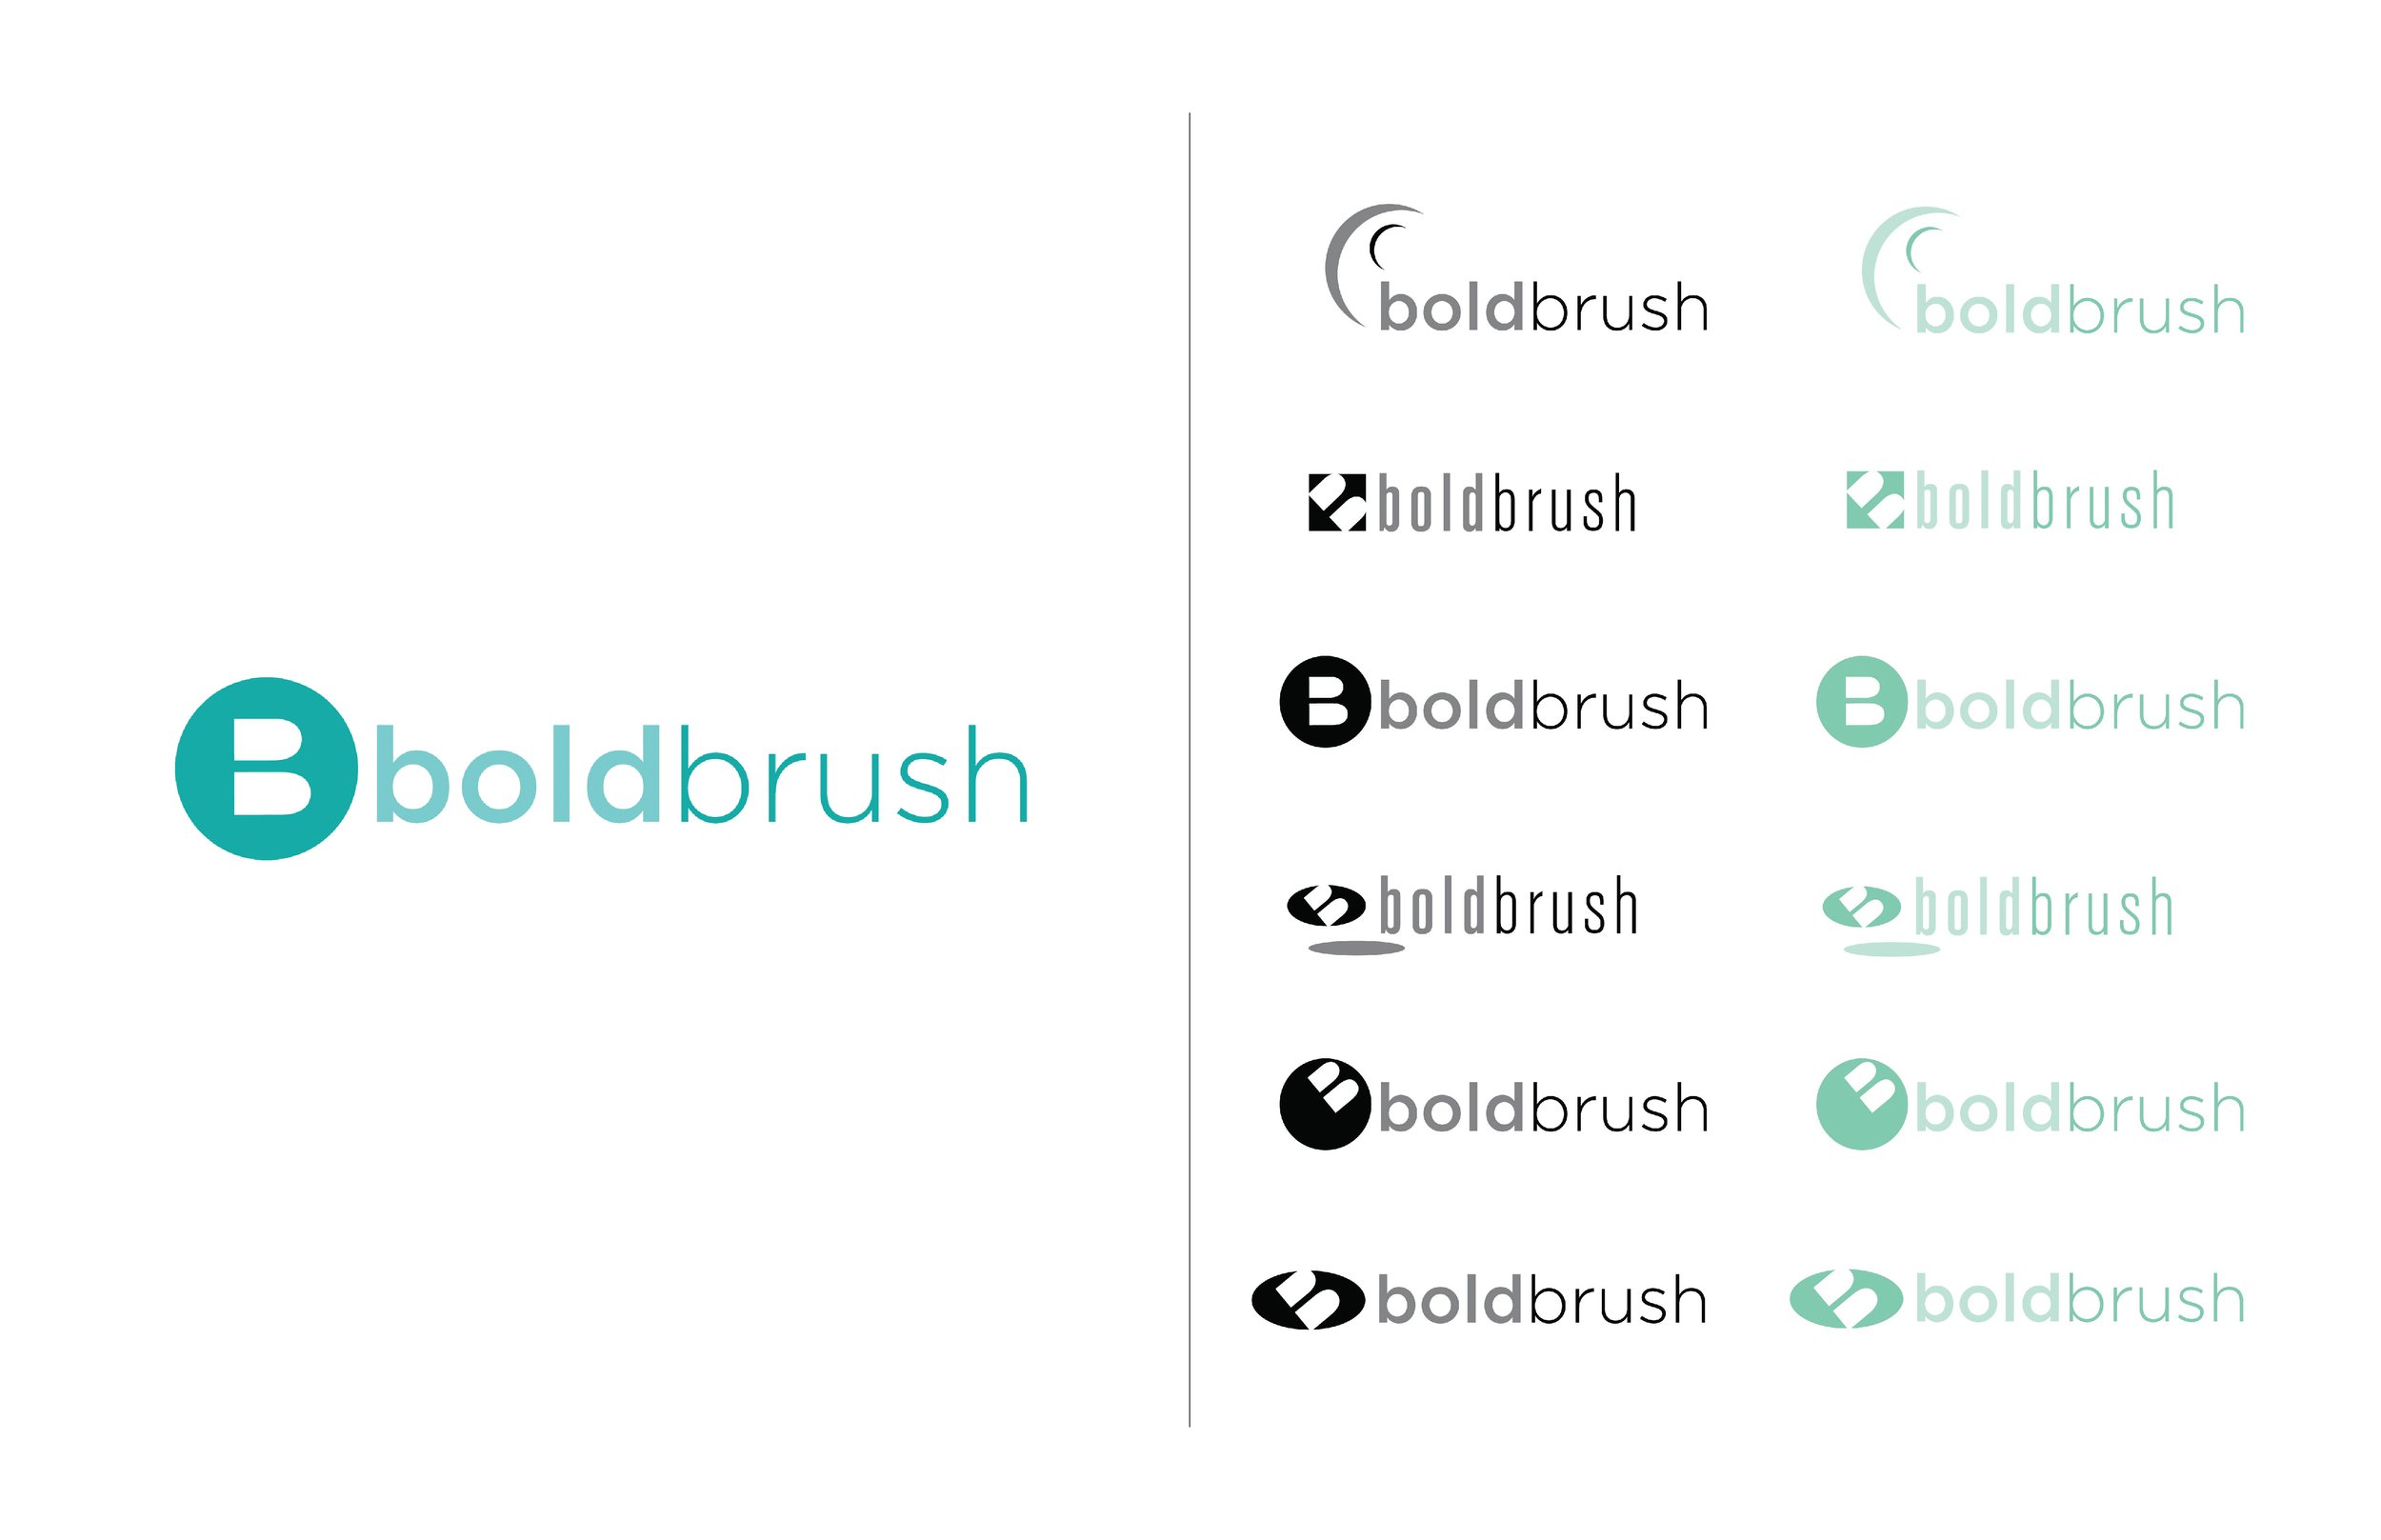   BOLDBRUSH   logo and outtakes         